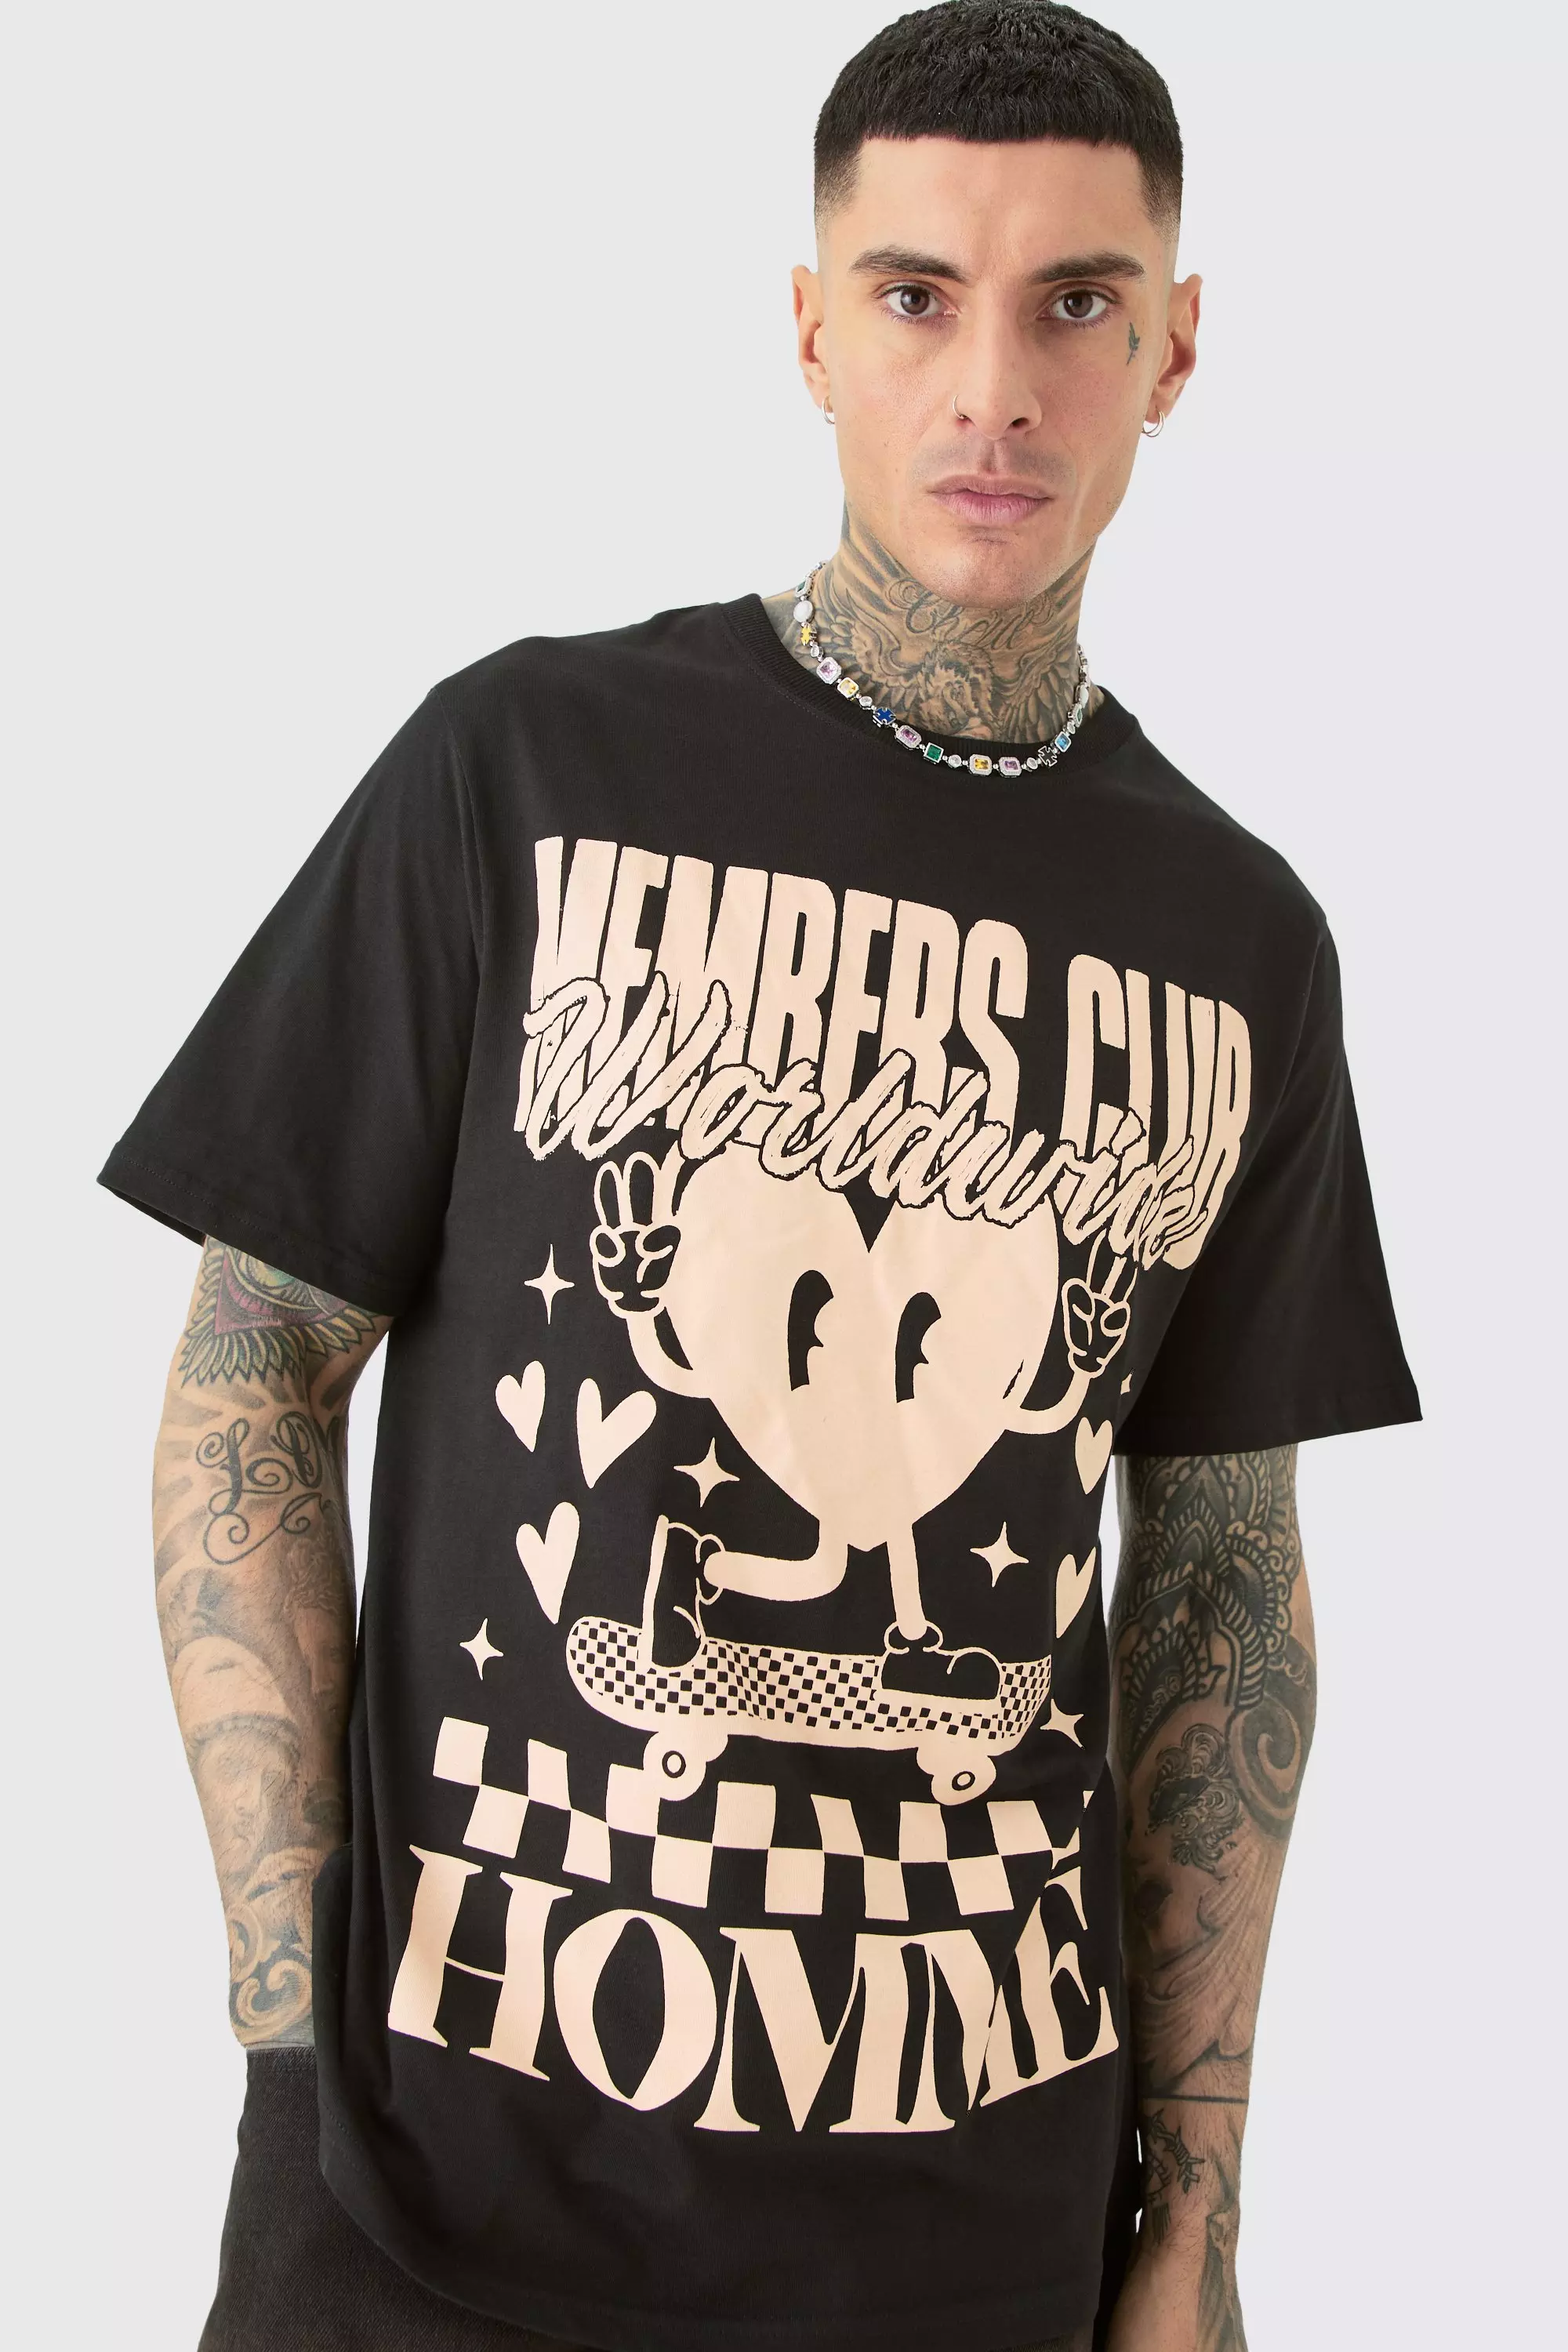 Tall Members Club Worldwide T-shirt In Black Black